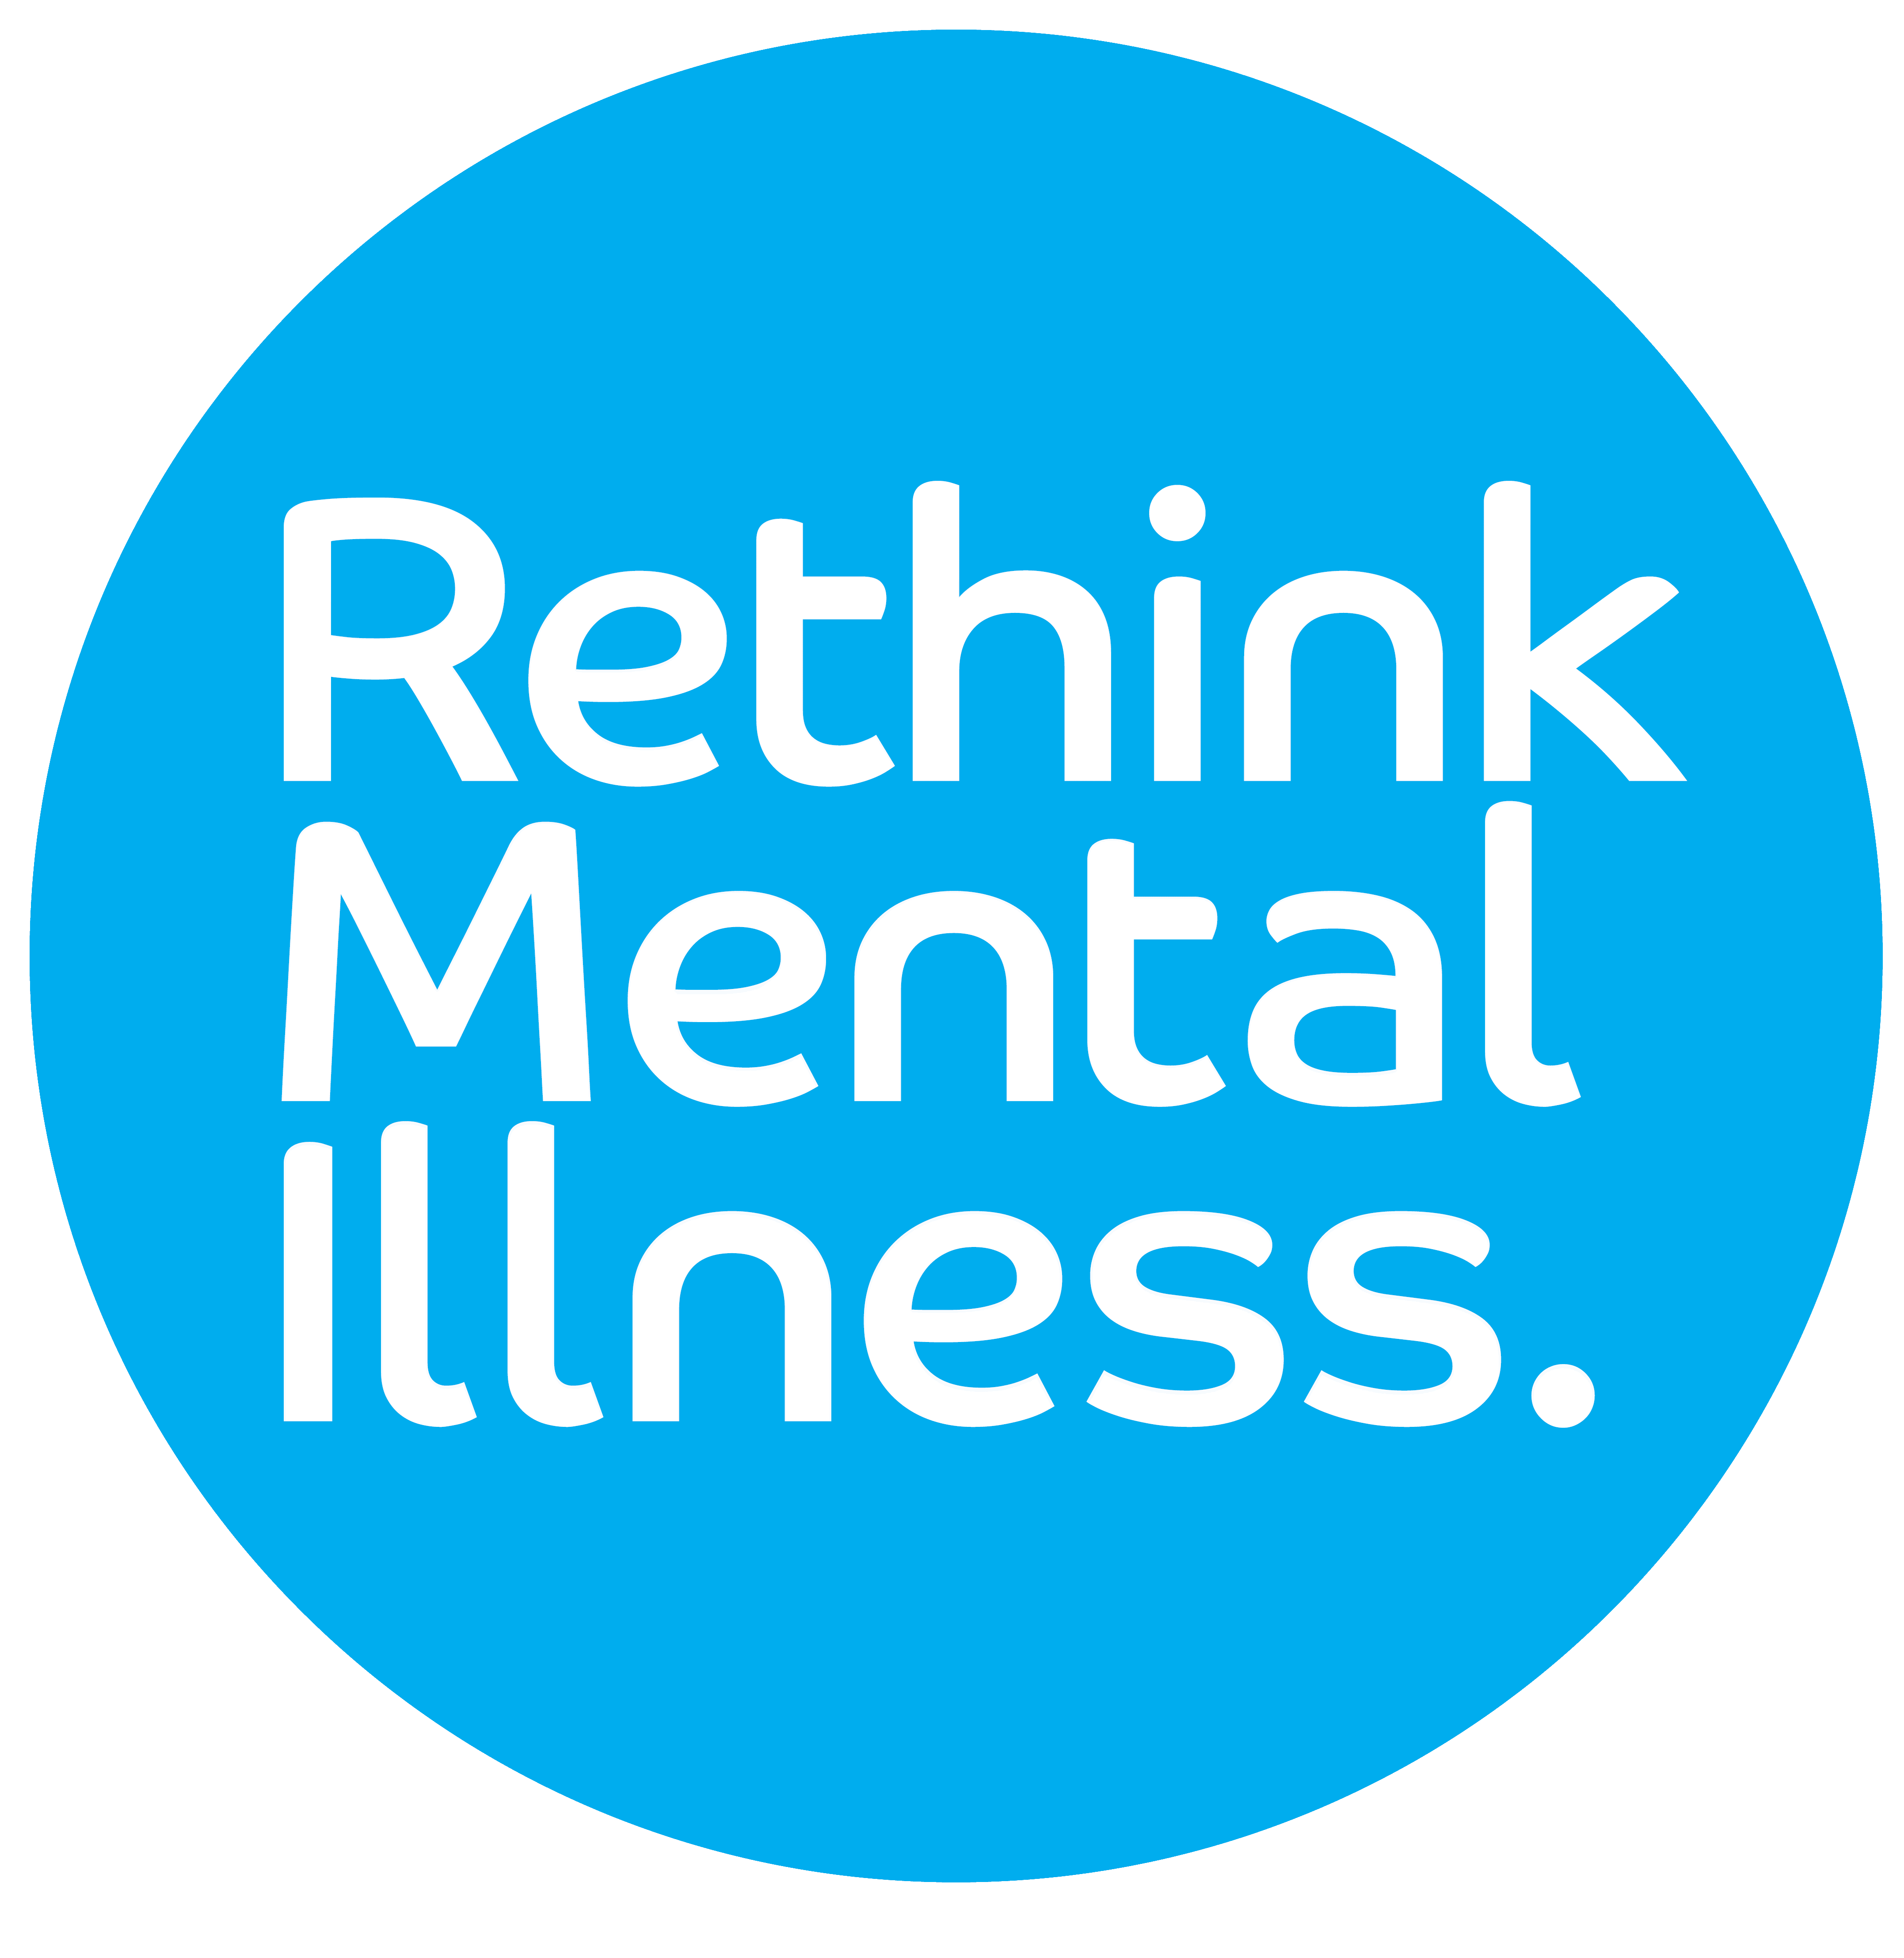 Rethink Mental Illness Ltd